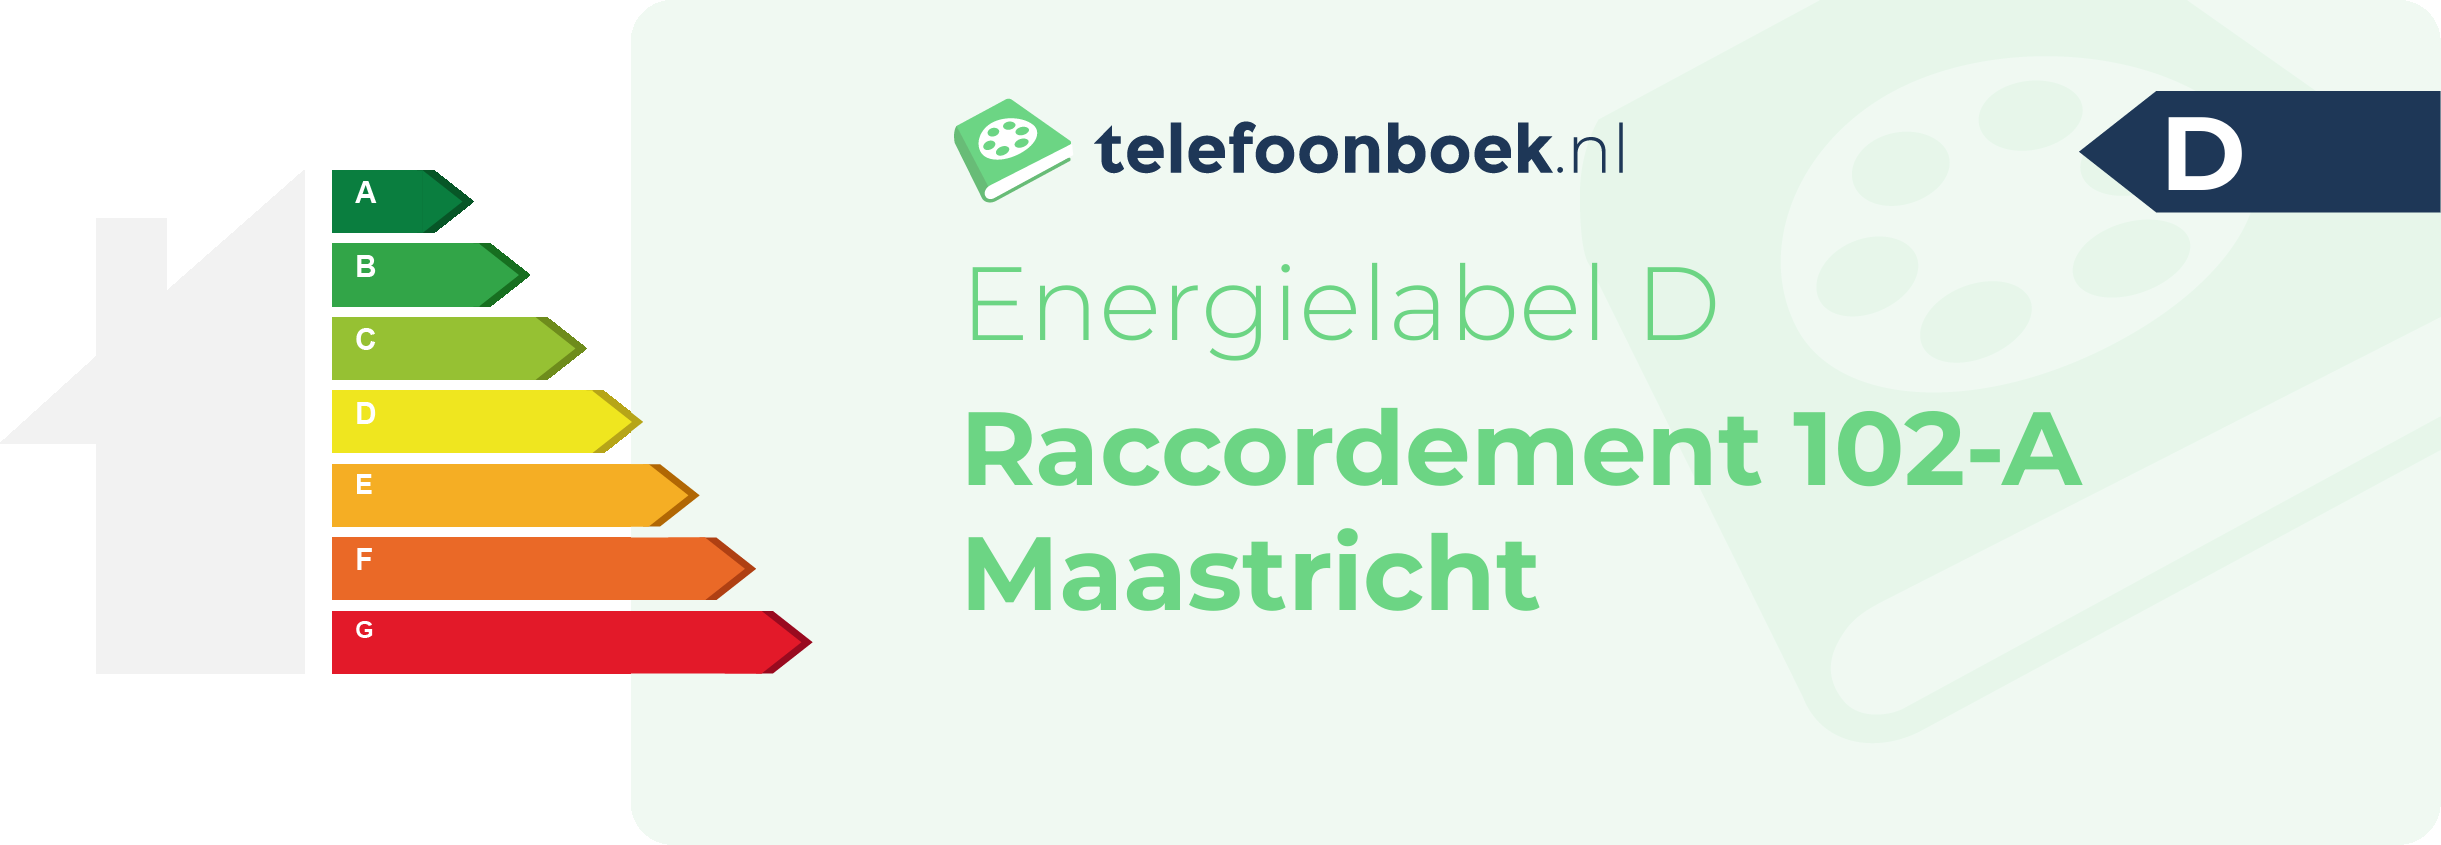 Energielabel Raccordement 102-A Maastricht